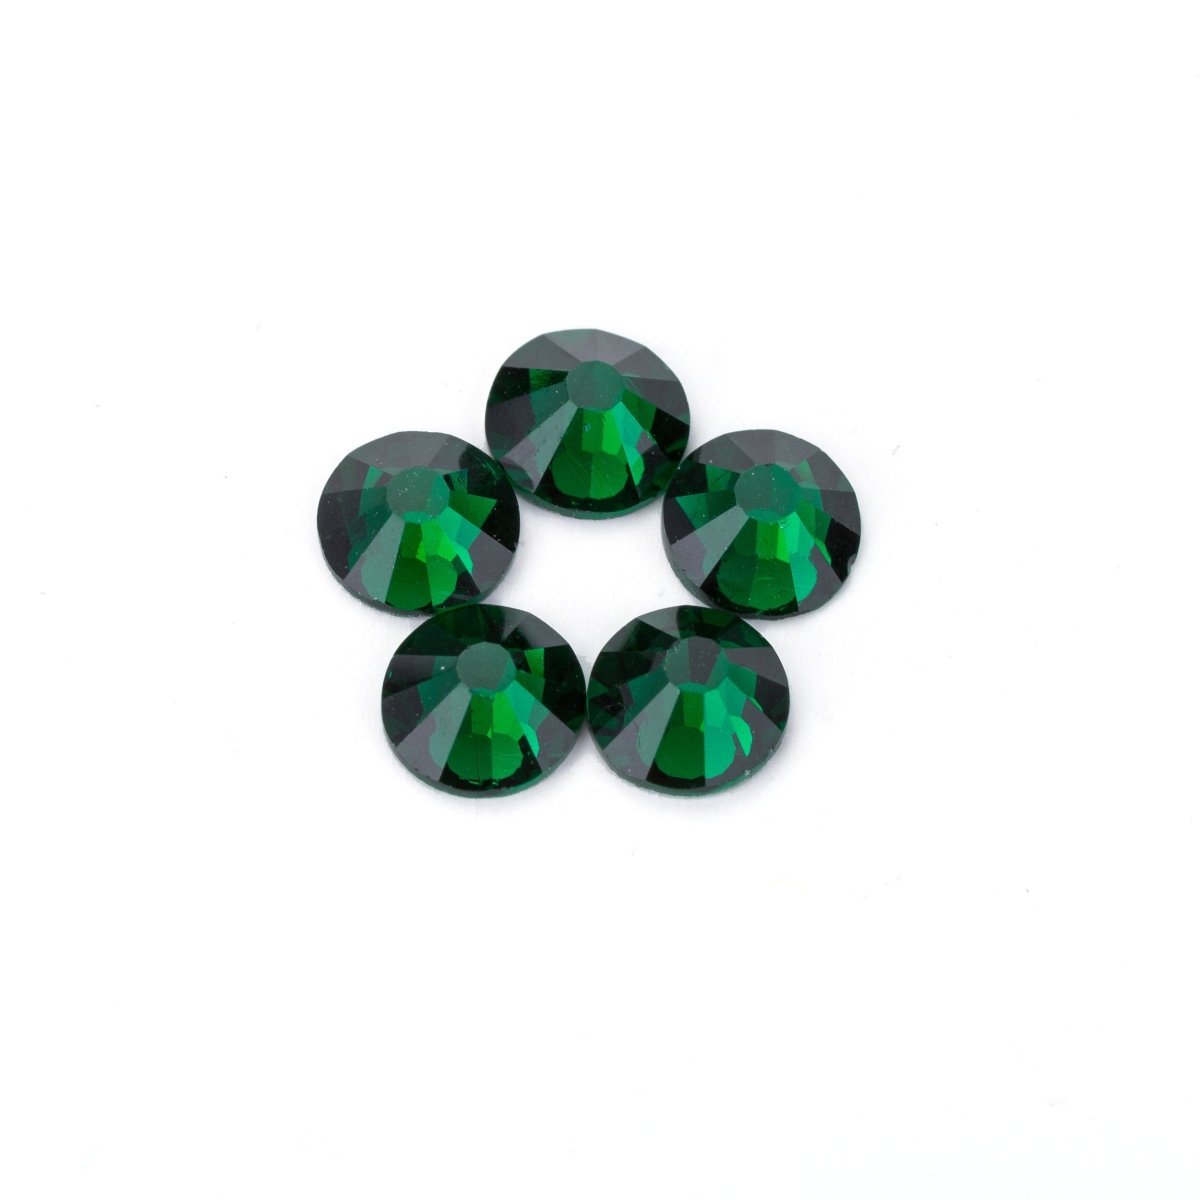 720 pcs Mixed Size ss6-30 Crystal Dark Emerald Green Rhinestone Flat Back Crystal Rhinestones Supreme Quality No HotFix Glass Crystals Beads - DLUXCA